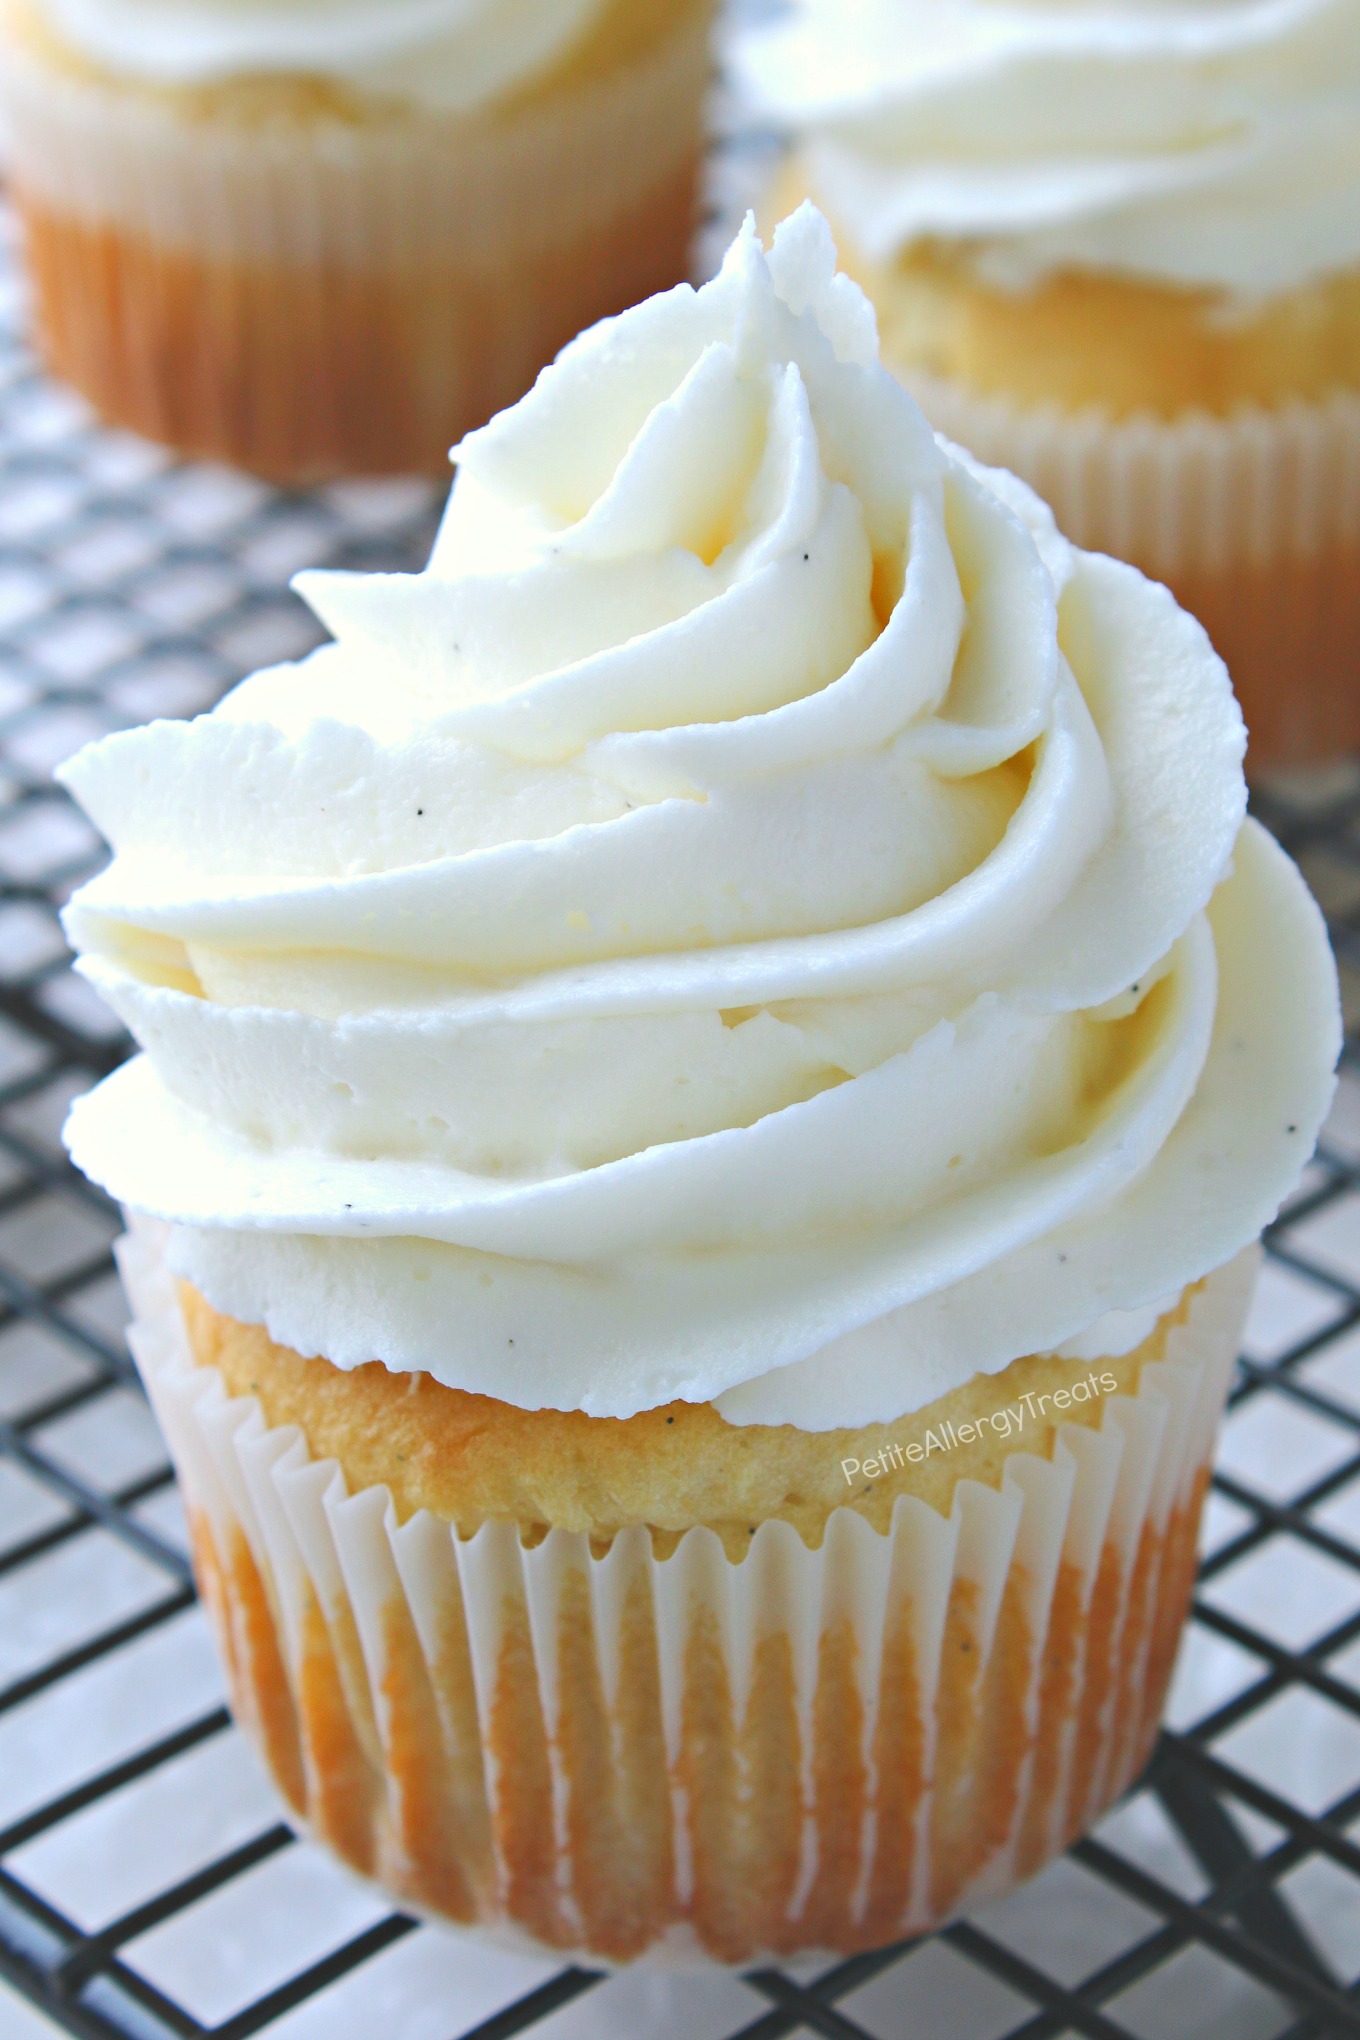 Gluten Free Vegan Vanilla Cupcakes Recipe (dairy free egg free)- Bakery style real vanilla bean cupcakes. Food Allergy friendly. Top 8 Free & Allergy Amulet.